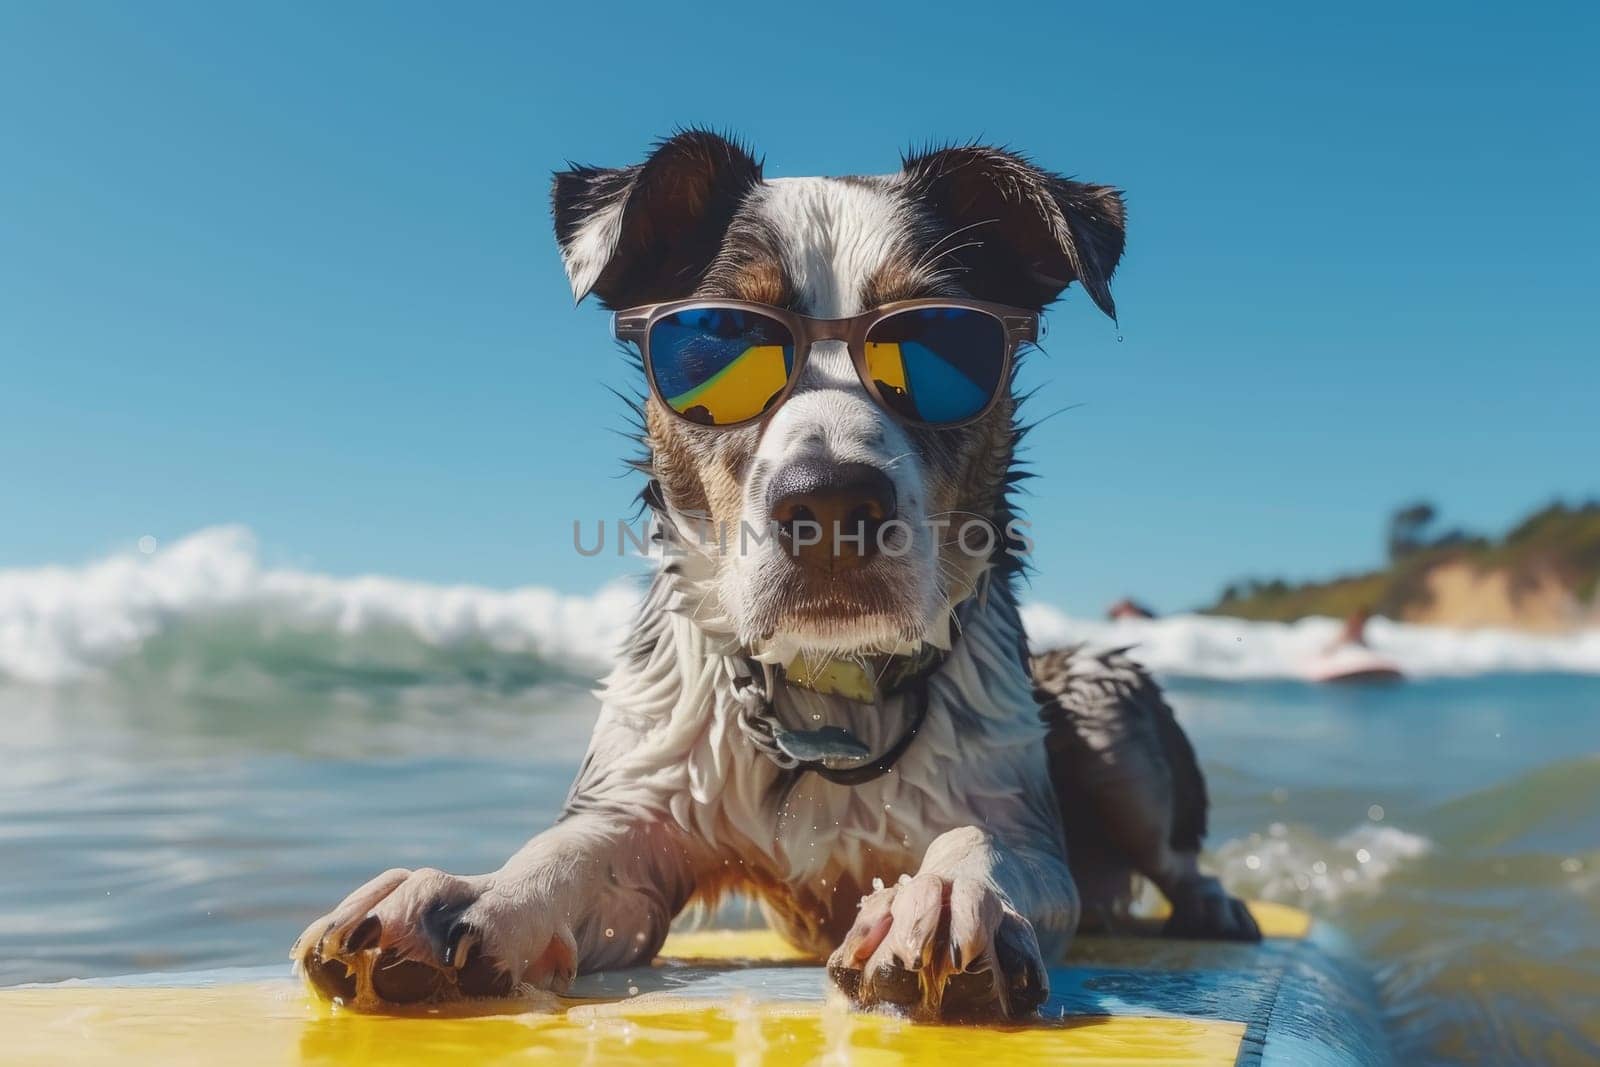 a dog wearing sunglasses riding a surfboard, summer activity by nijieimu